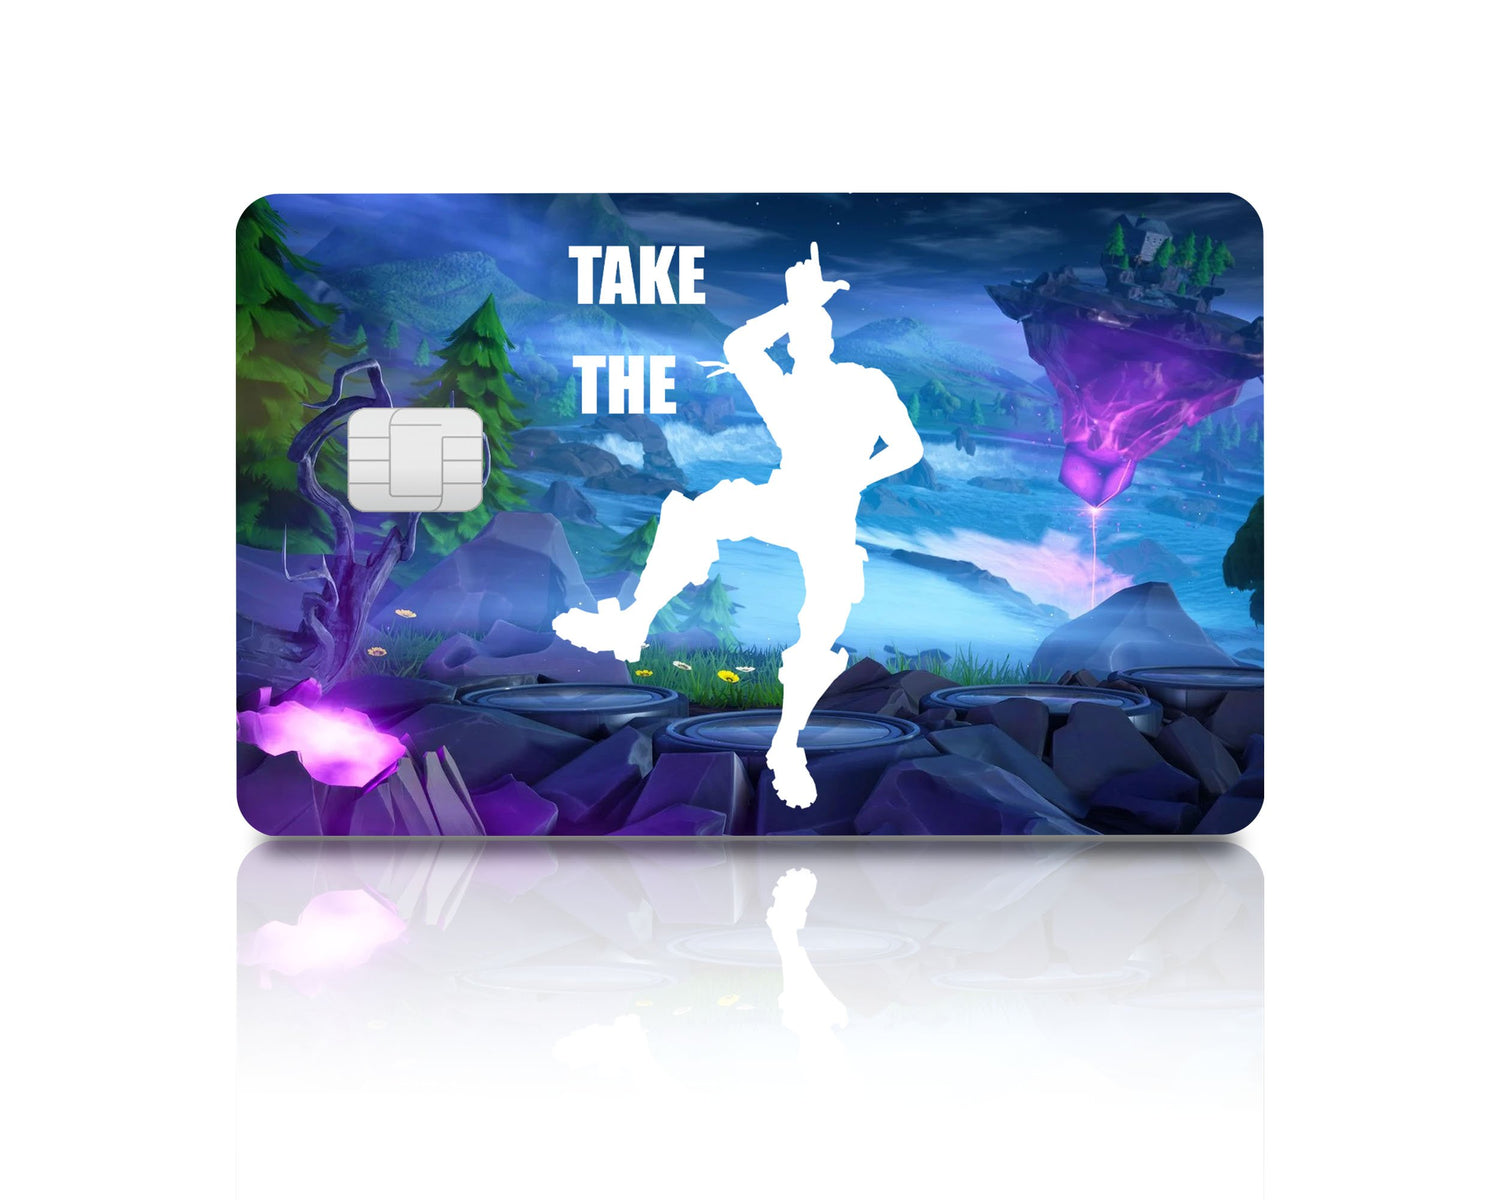 Flex Designs Credit Card Take the L Full Skins - Game Fortnite & Debit Card Skin